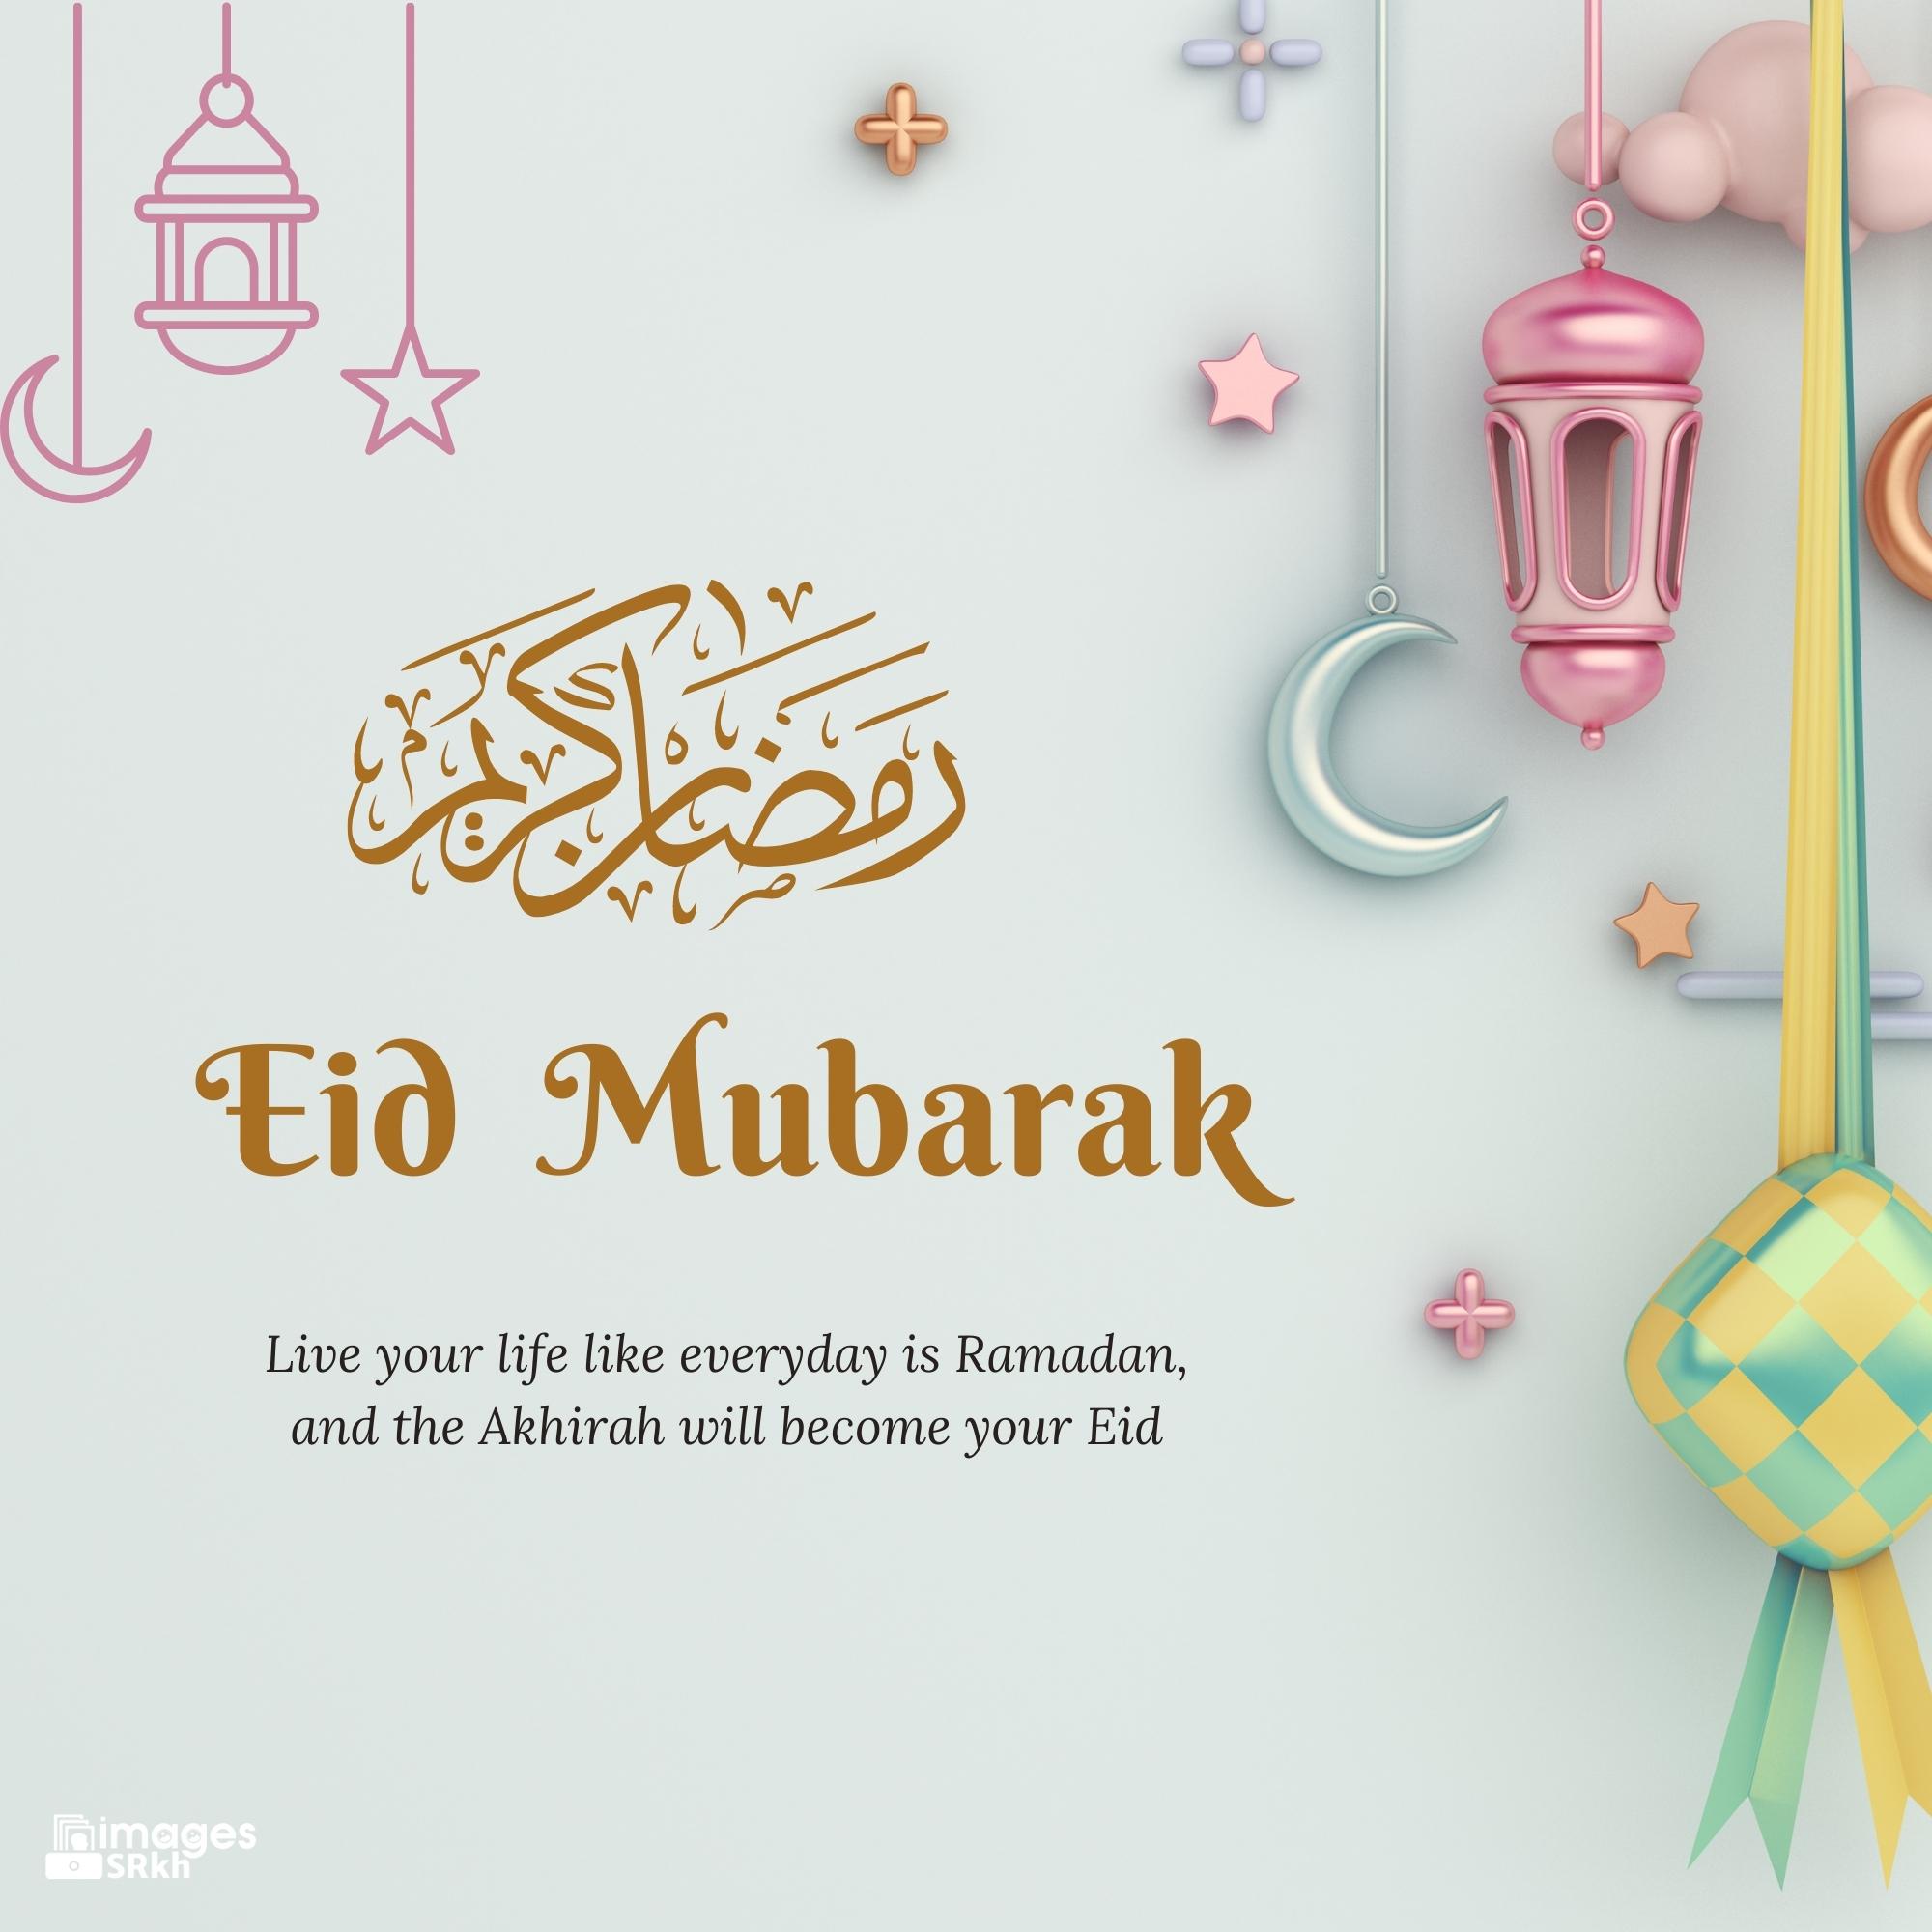 Photo Eid Mubarak | Download free in Hd Quality | imagesSRkh